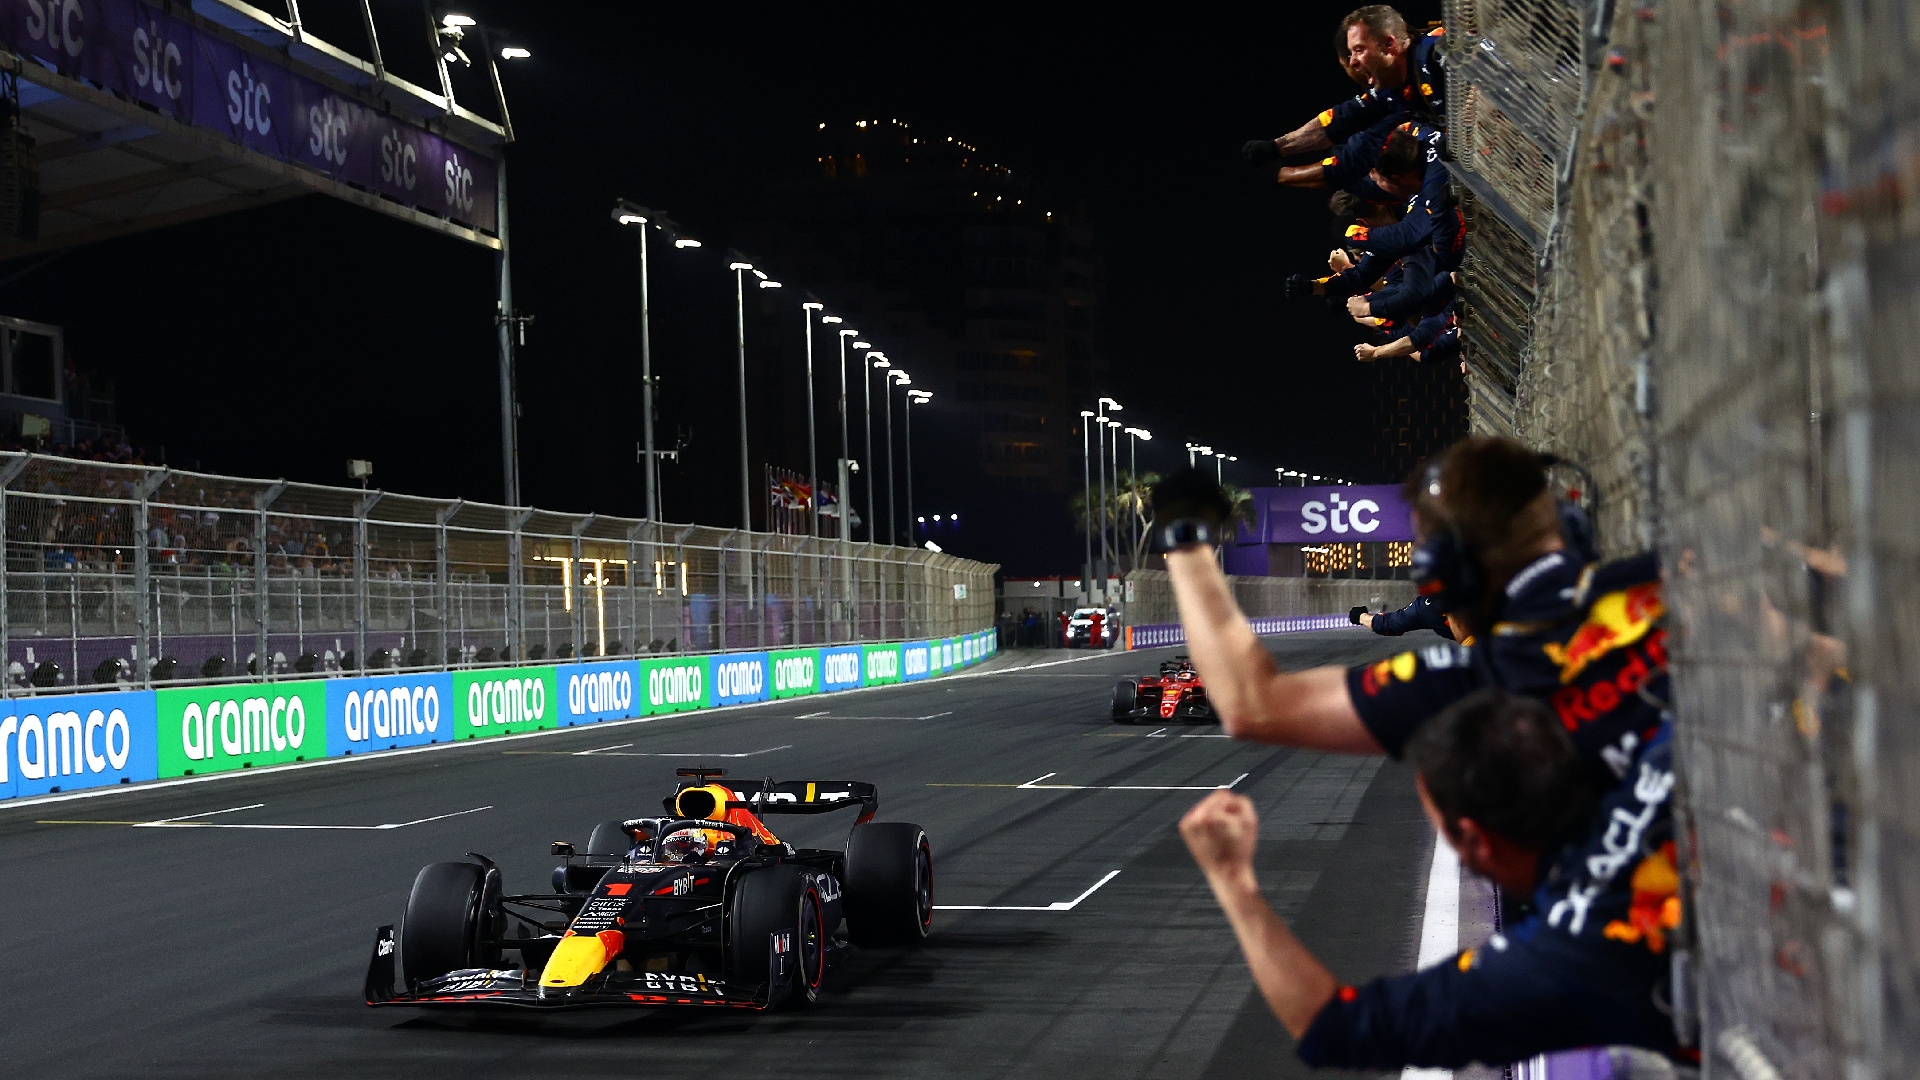 Auto Racing: Red Bull Racing, Max Verstappen, The winner, Epic battle, Saudi Arabian Grand Prix. 1920x1080 Full HD Background.